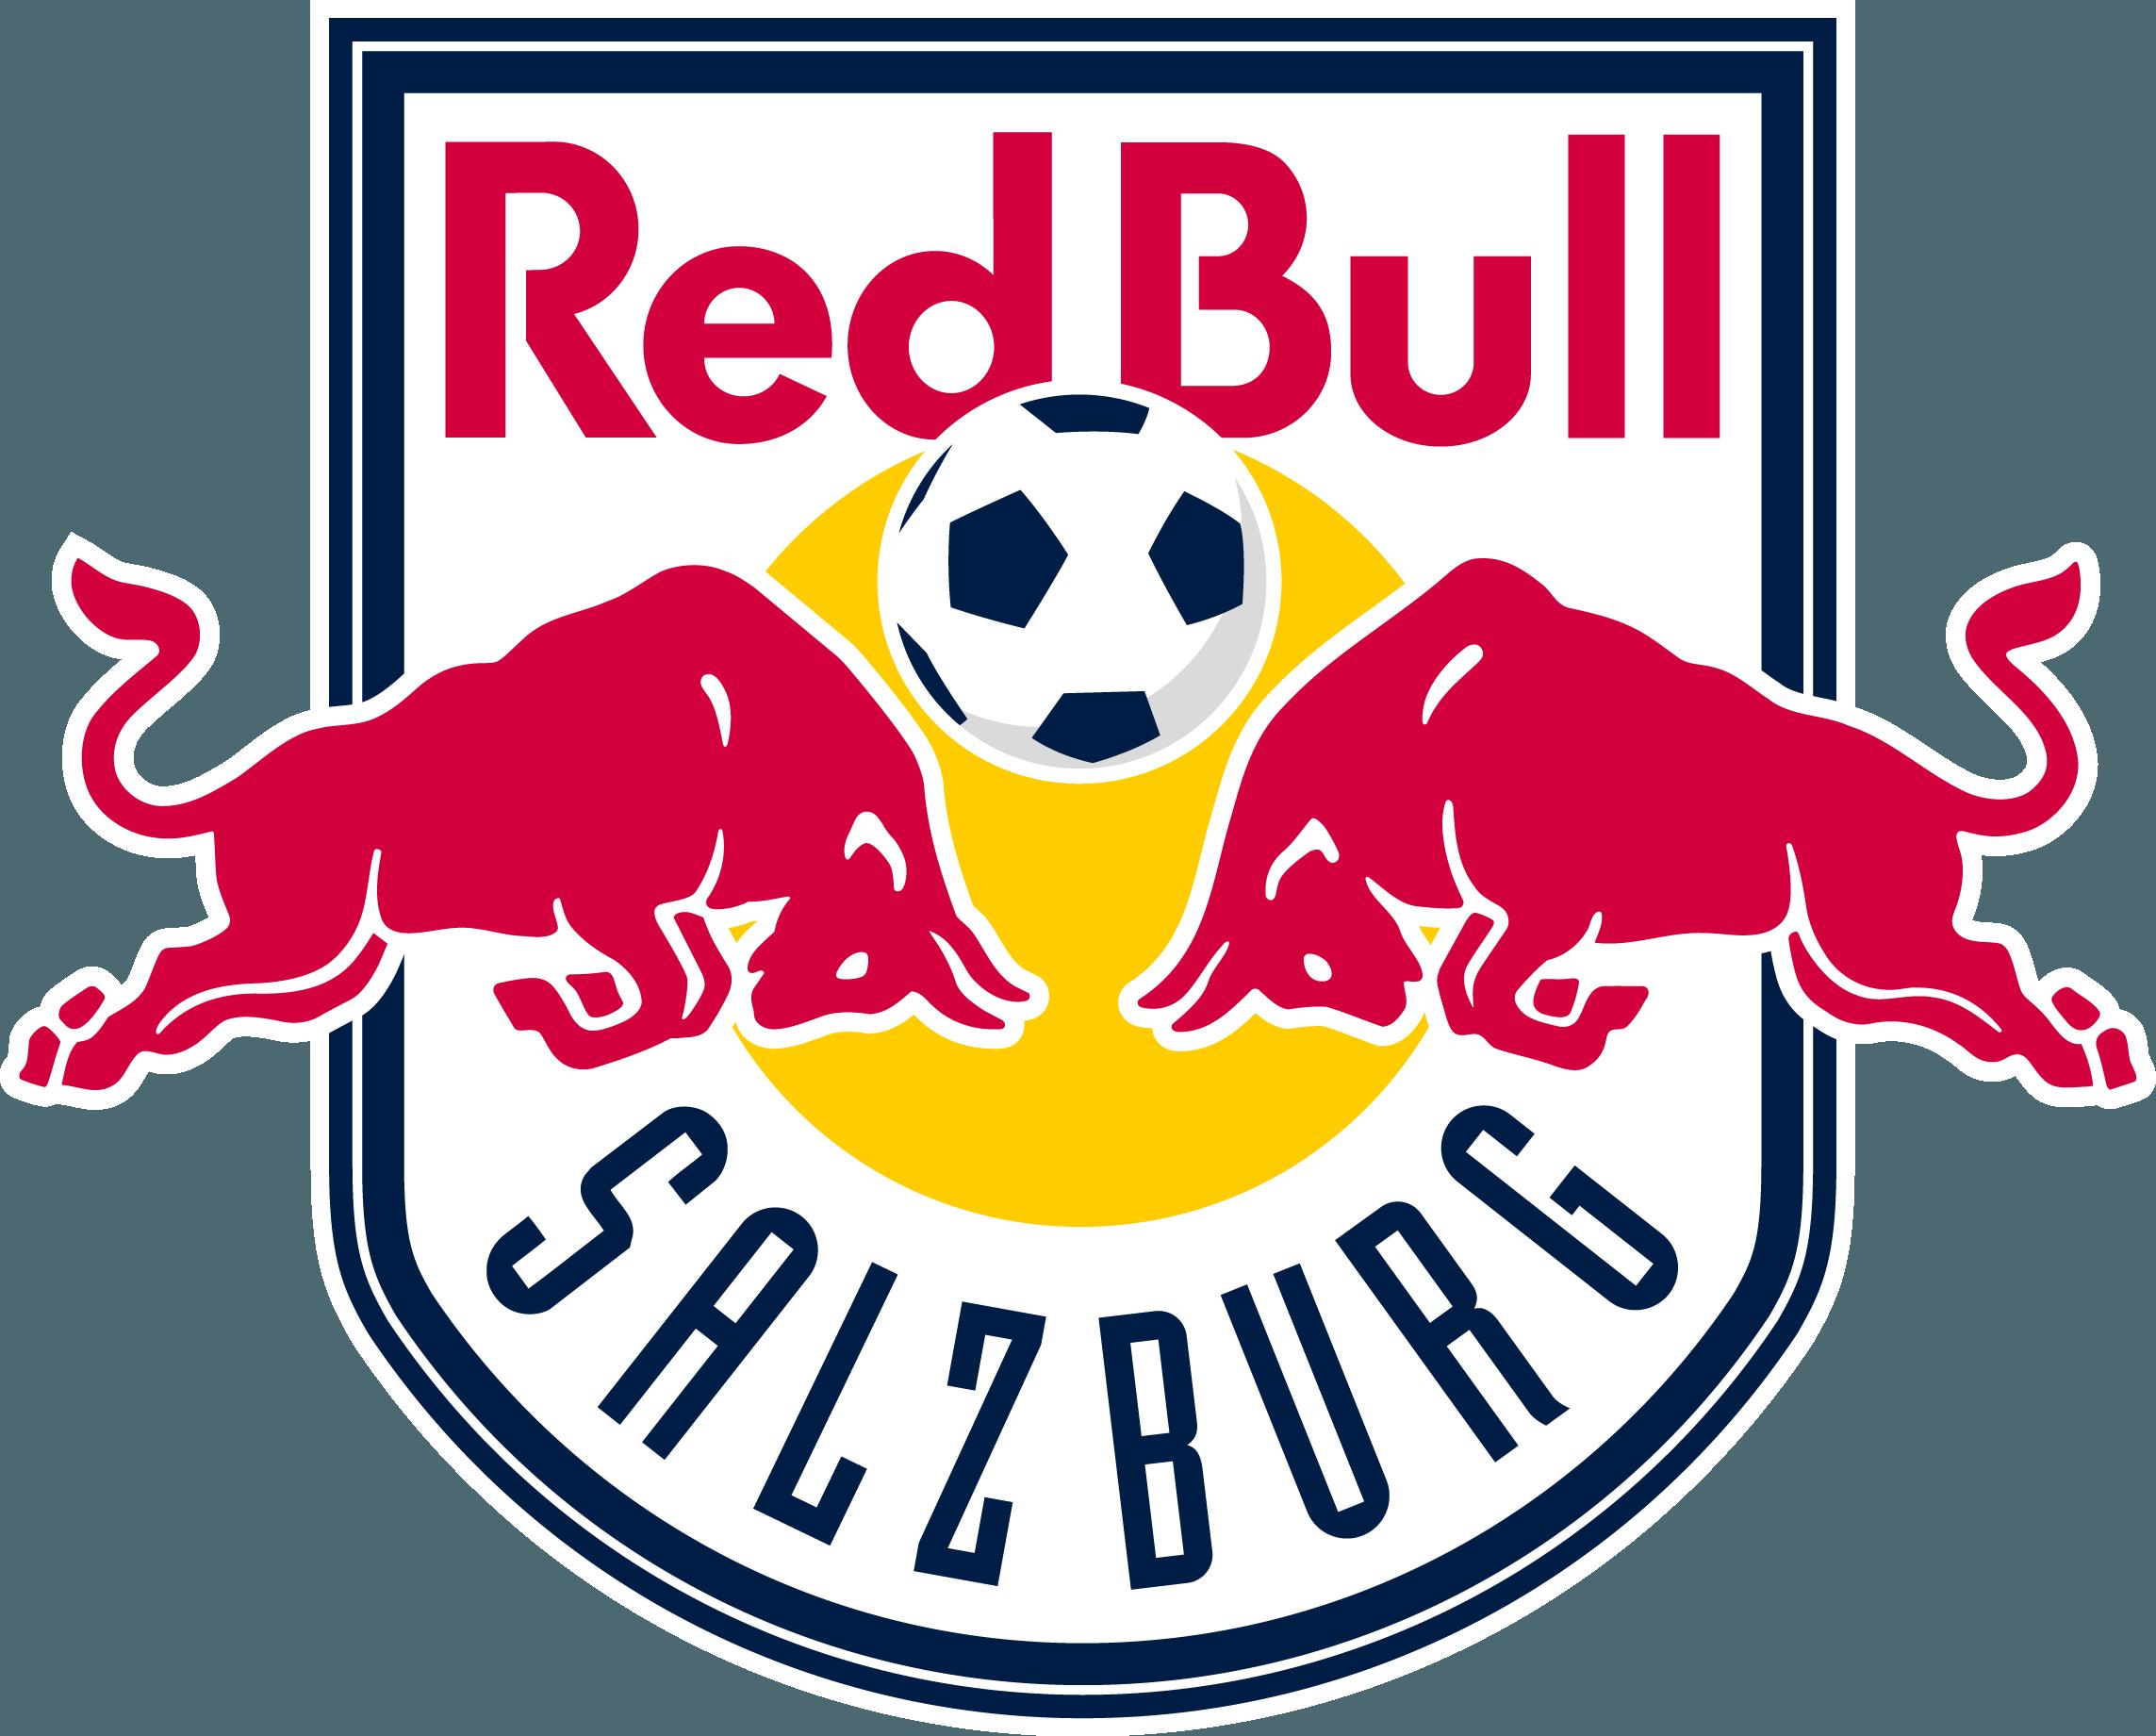 FC Red Bull Salzburg Wallpapers - Wallpaper Cave